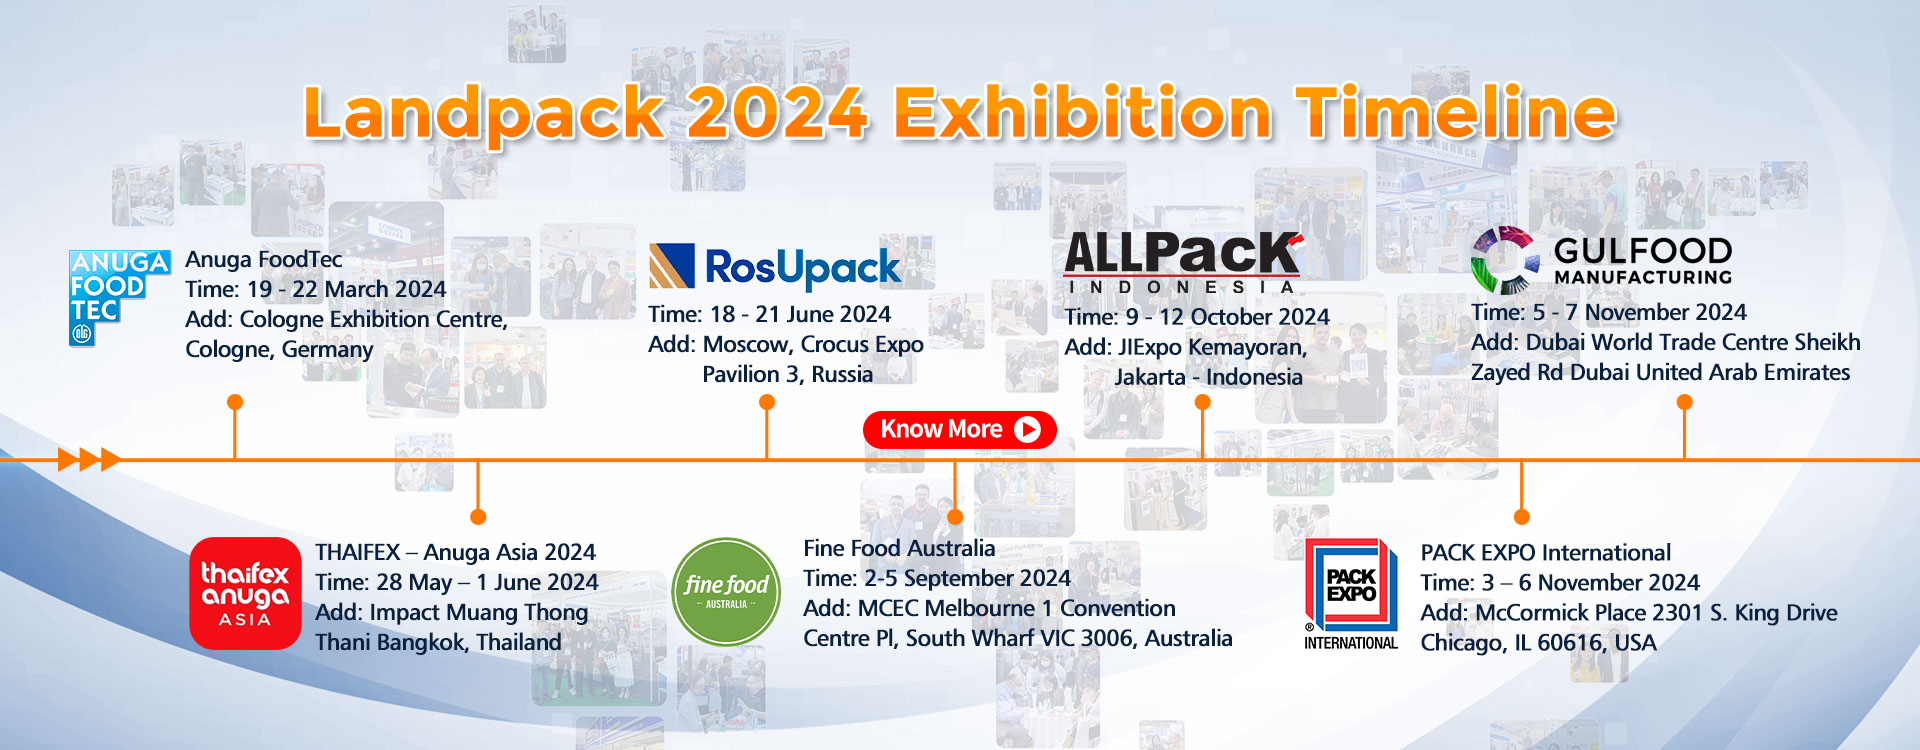 Landpack 2024 Exhibition Timeline - Where Will We Meet?cid=9